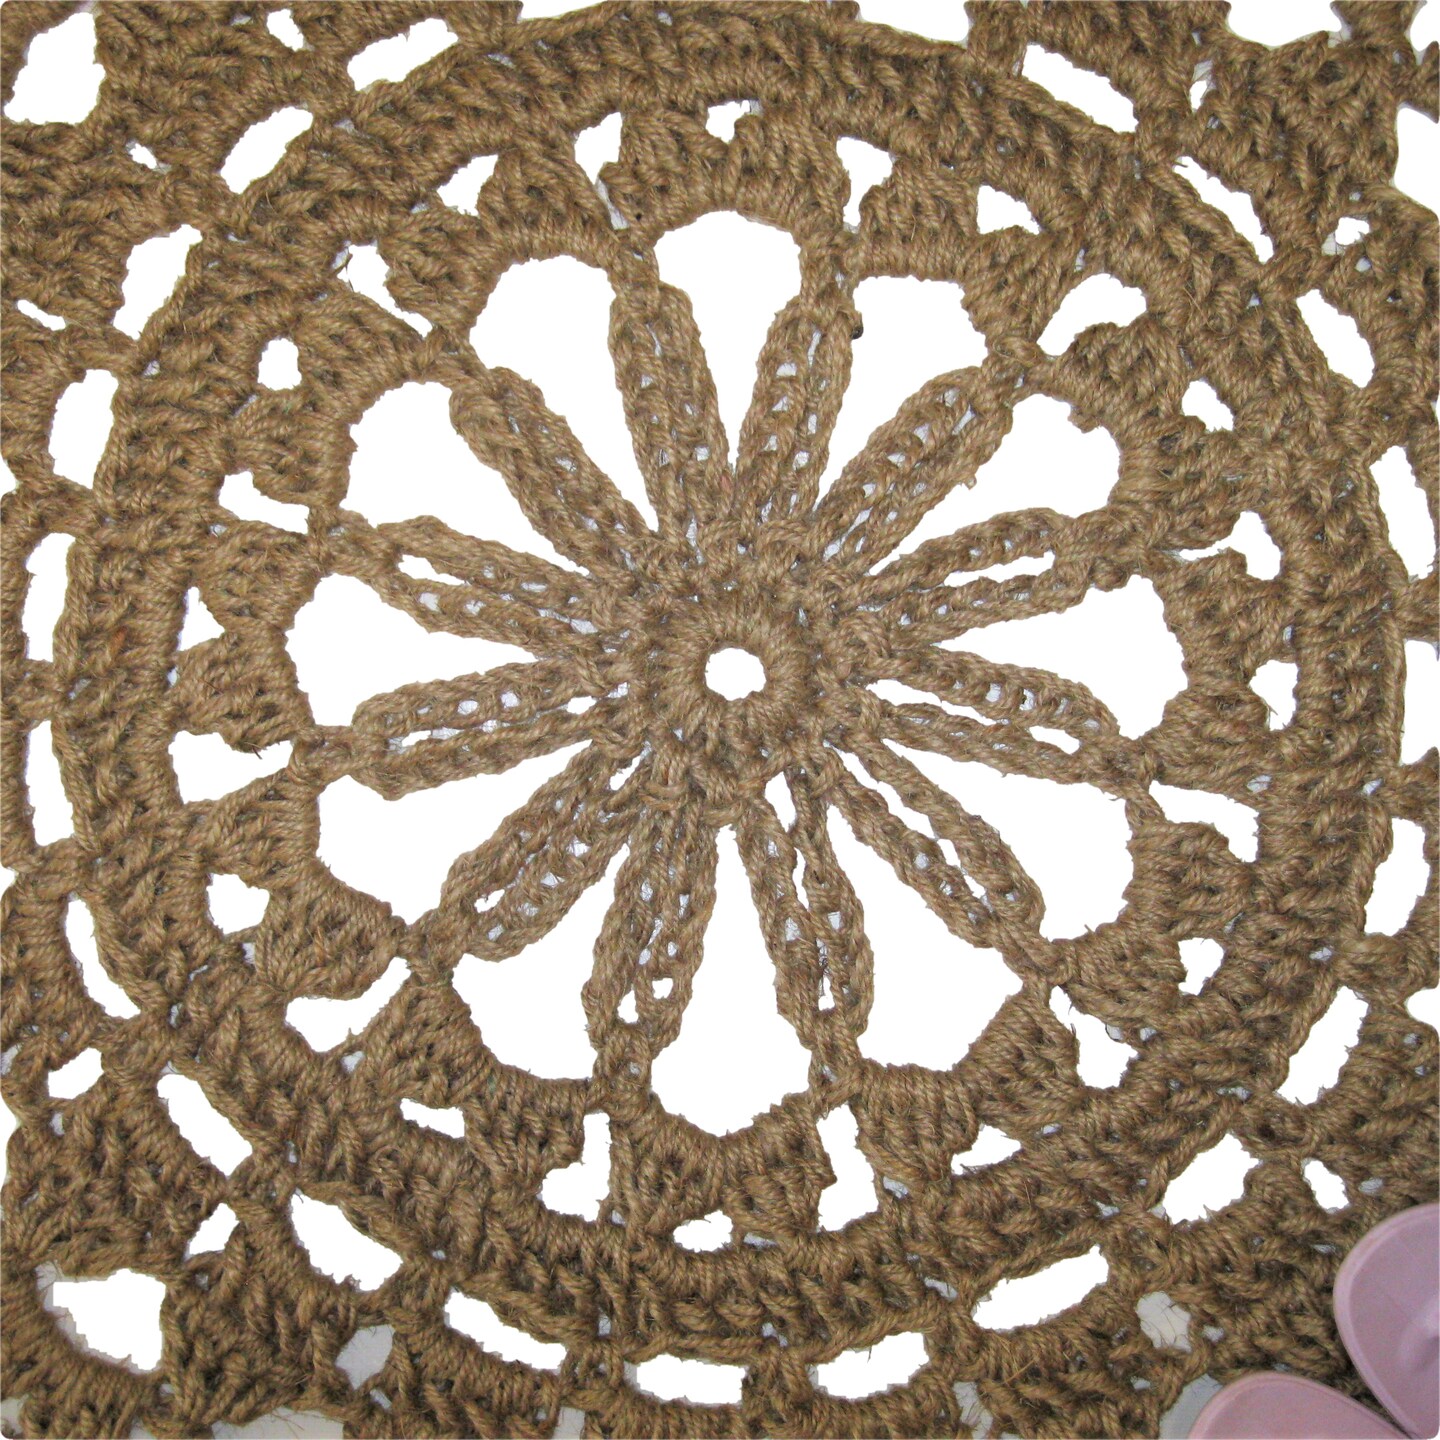 Crochet Jute Rug, Circles Rug, Jute Rug, Handmade, Round Jute Rug